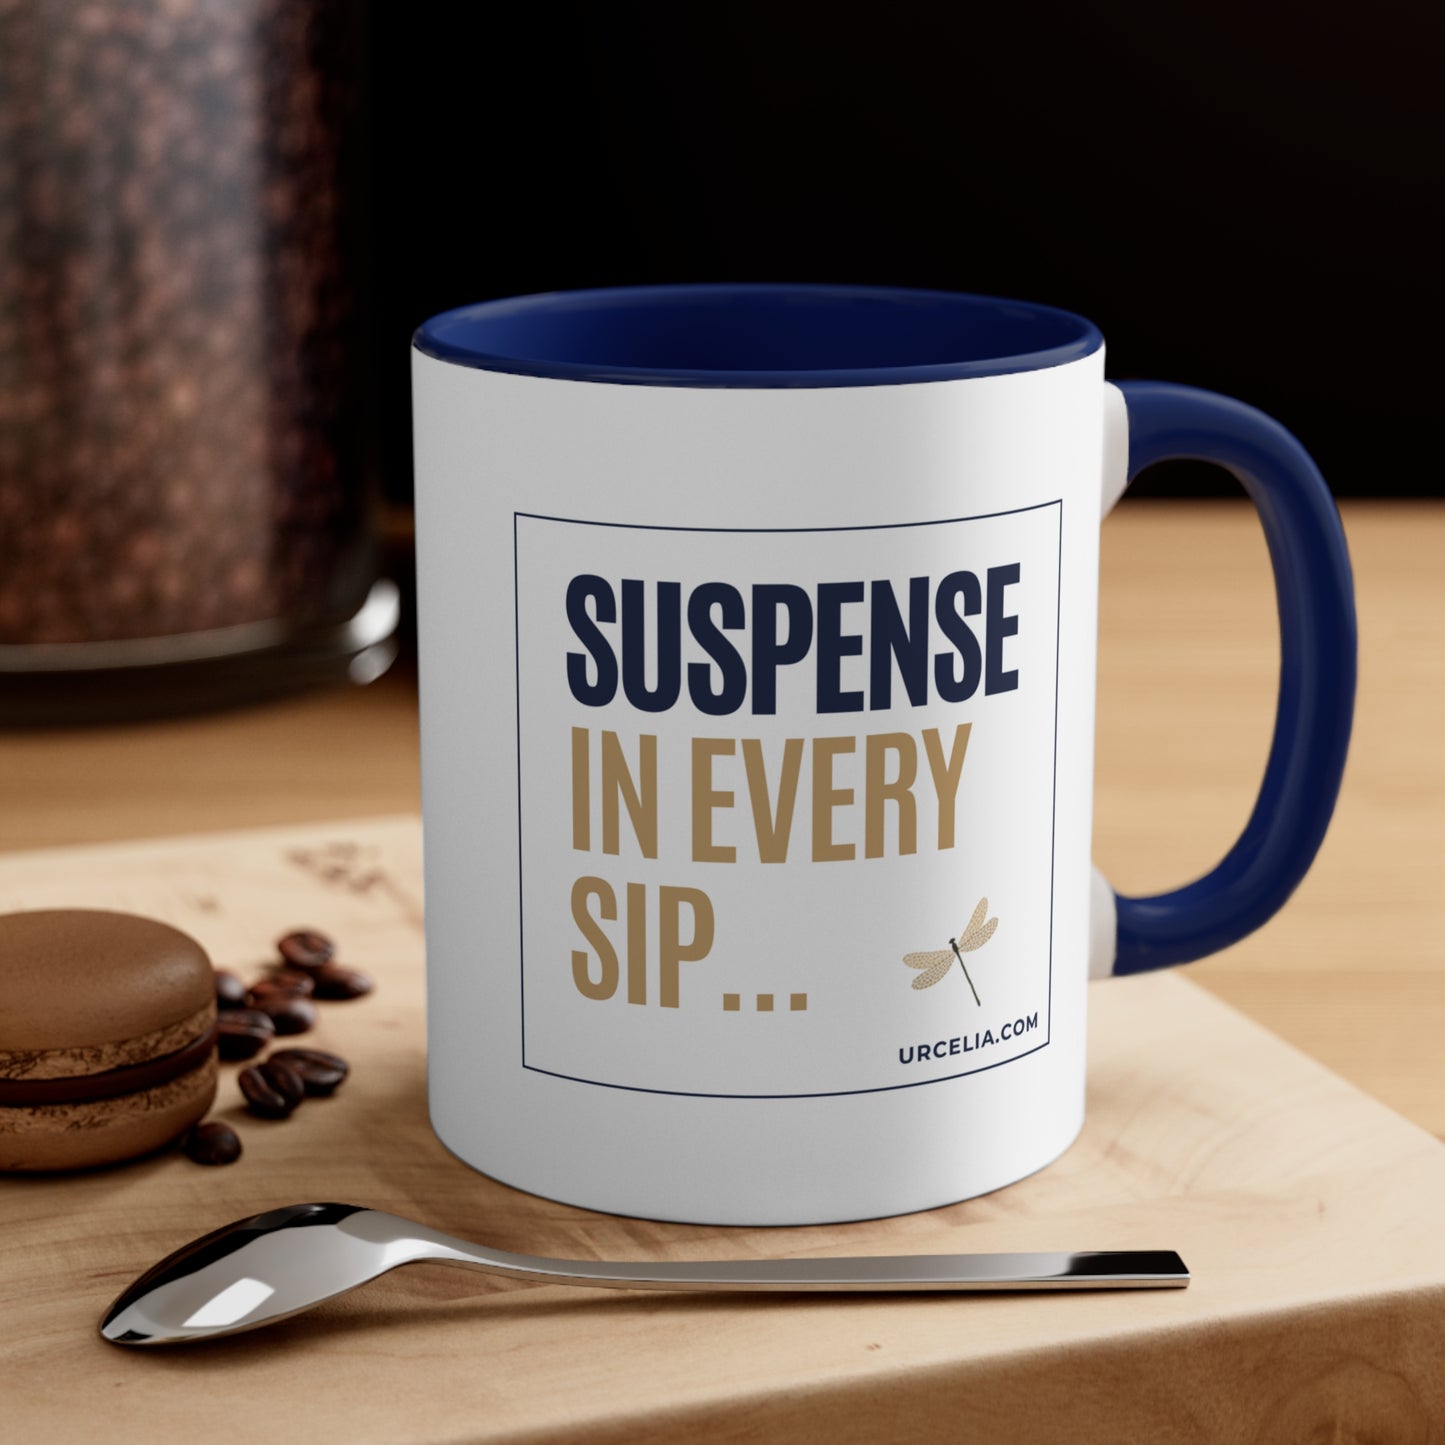 Suspense in Every Sip Mug, 11oz